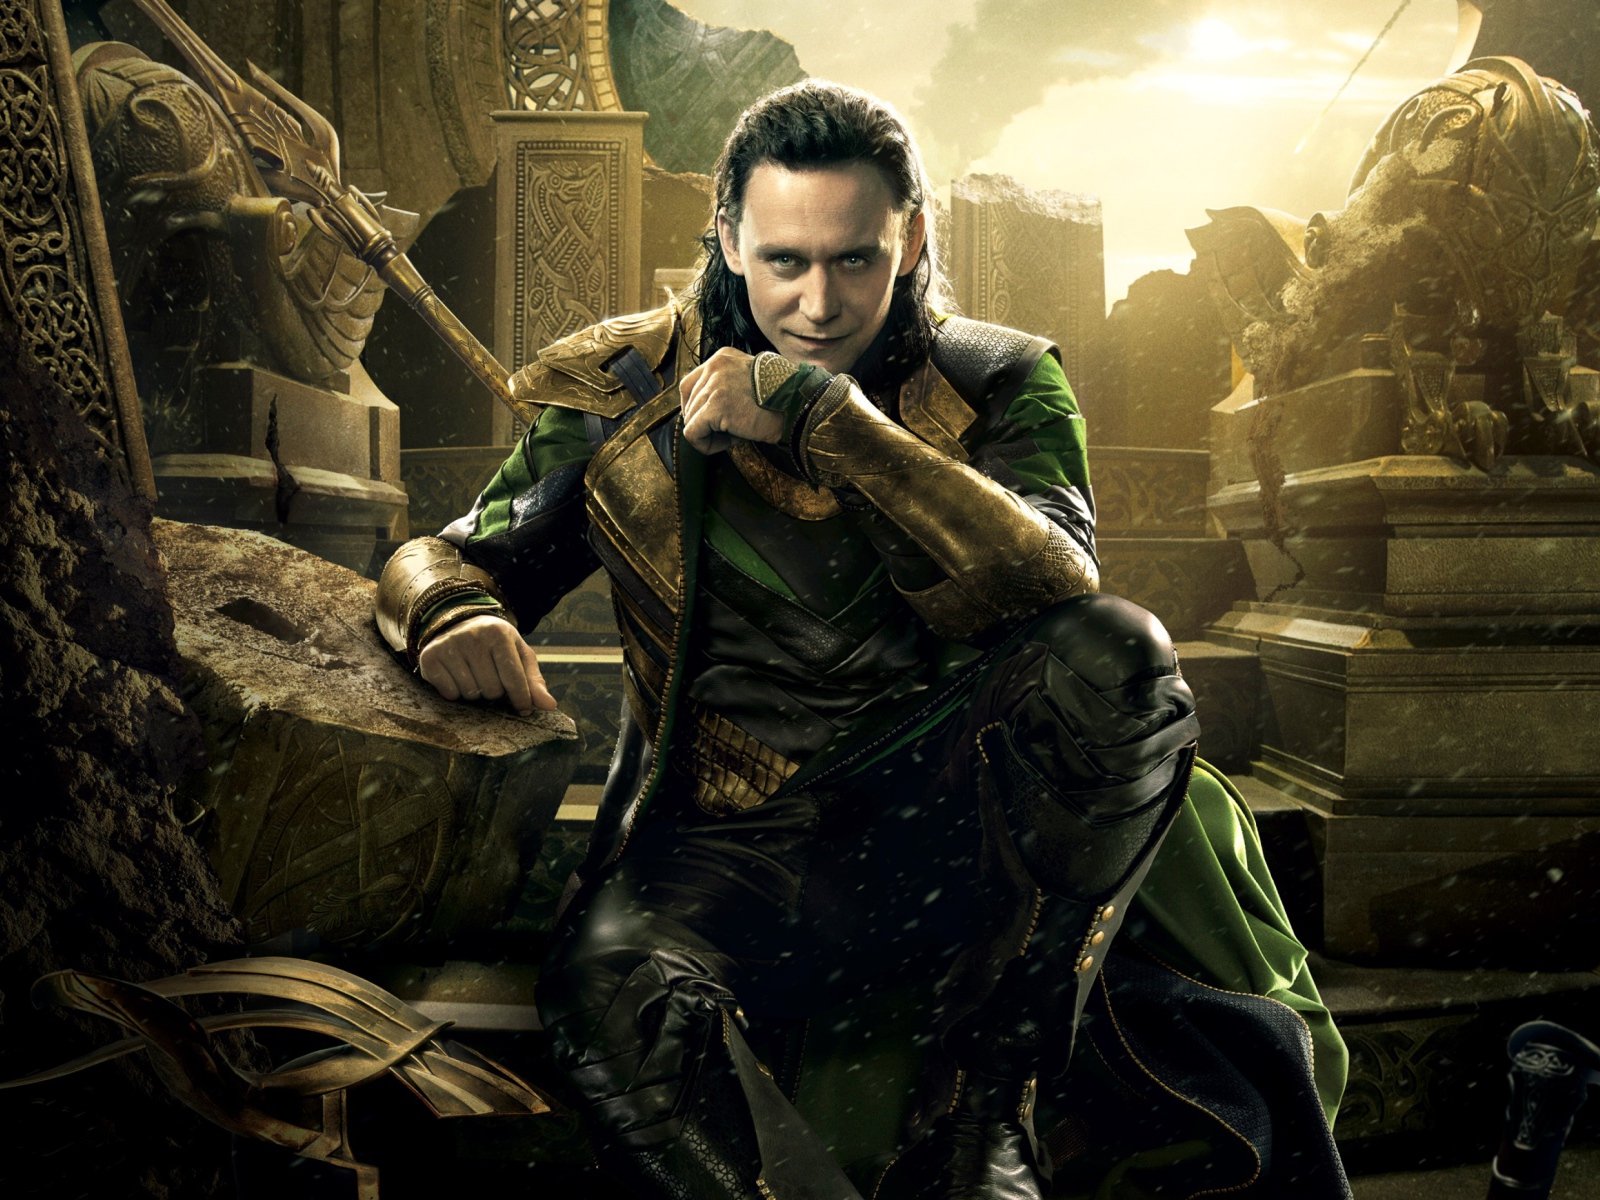 Actor Tom Hiddleston character Loki in the movie Thor. Ragnarok, 2017